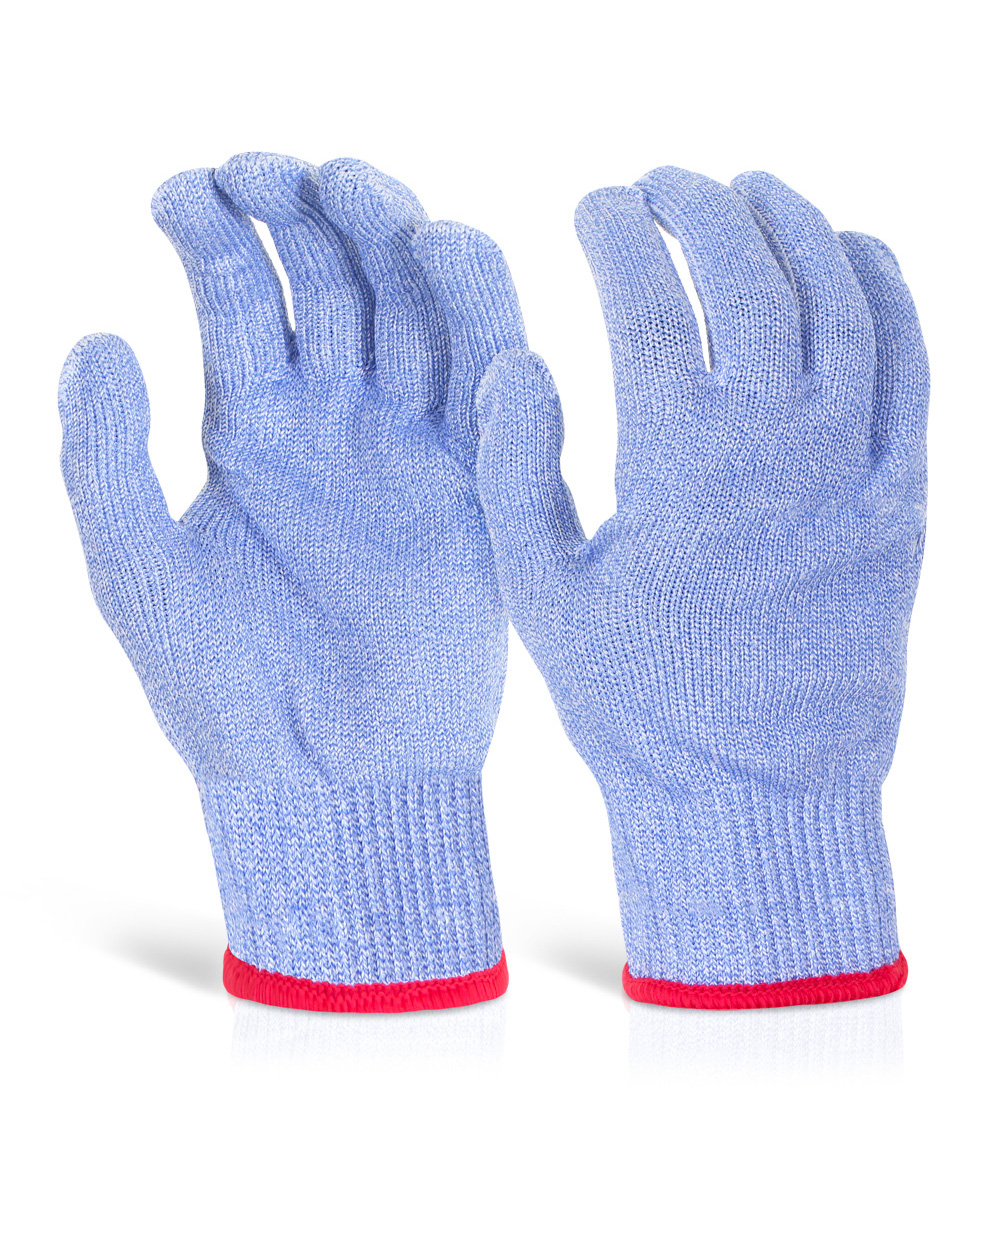 Glovezilla Cut Resistant Food Safe Glove Blue